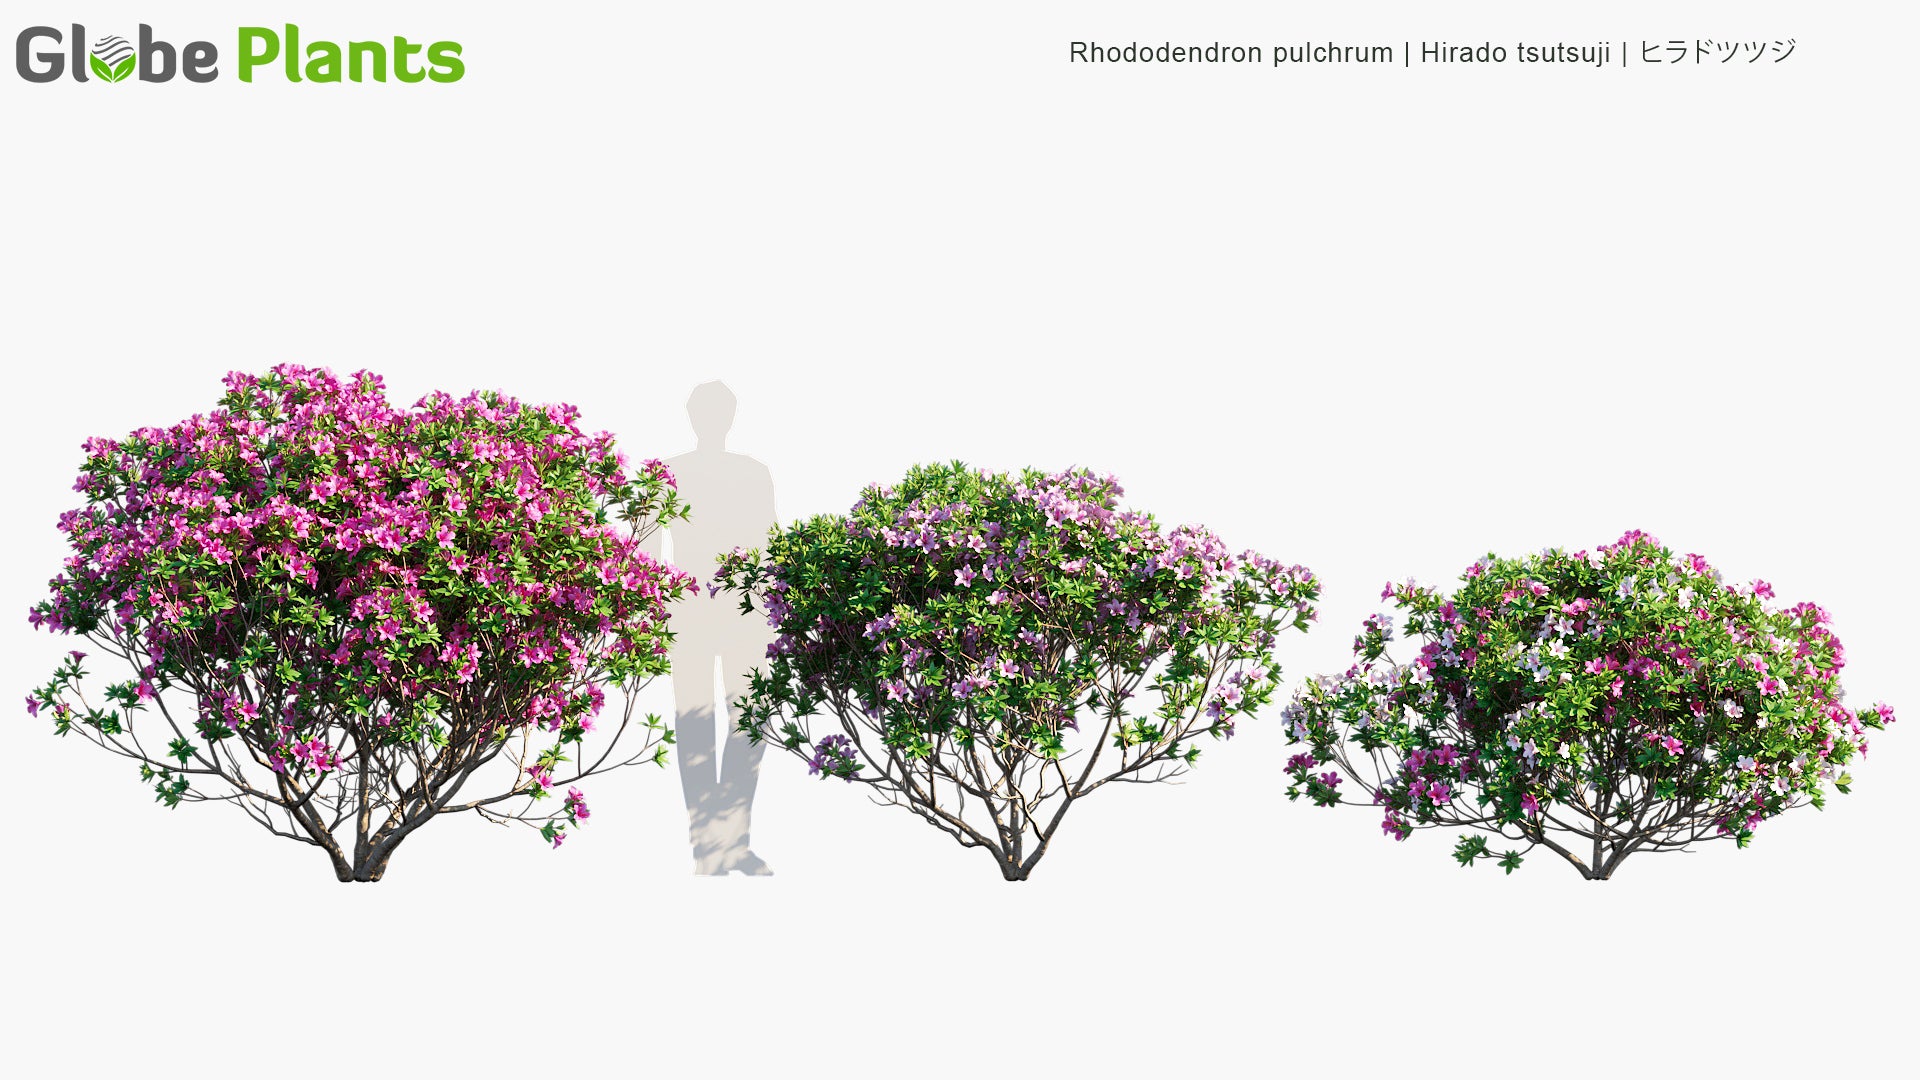 Rhododendron Pulchrum - Hiradotsutsuji, 锦绣杜鹃, ヒラドツツジ